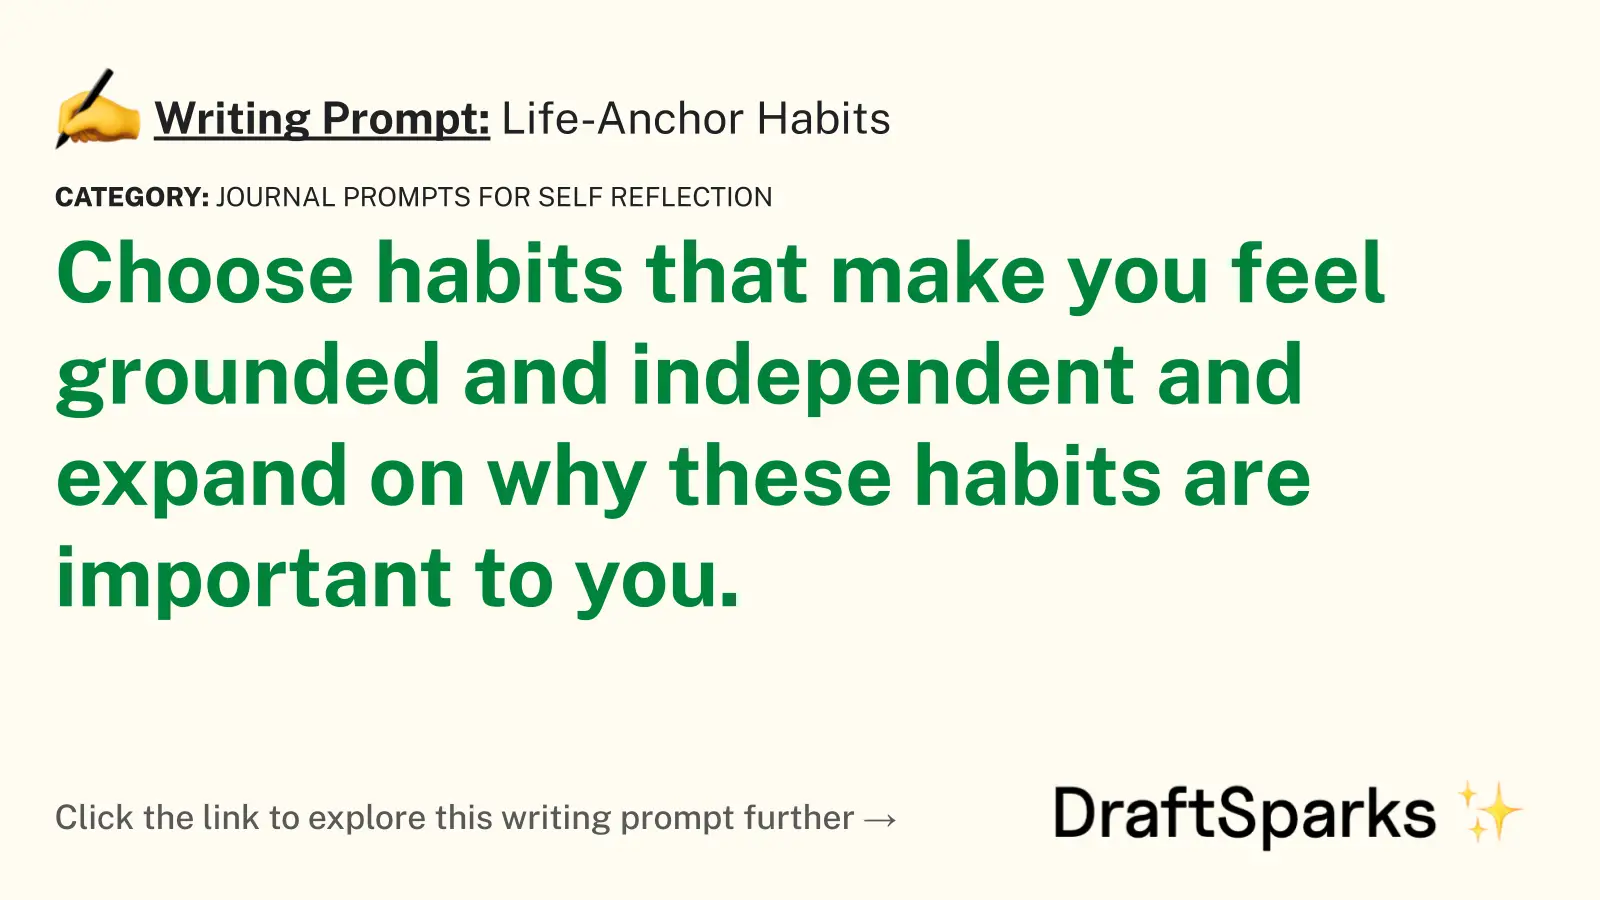 Life-Anchor Habits